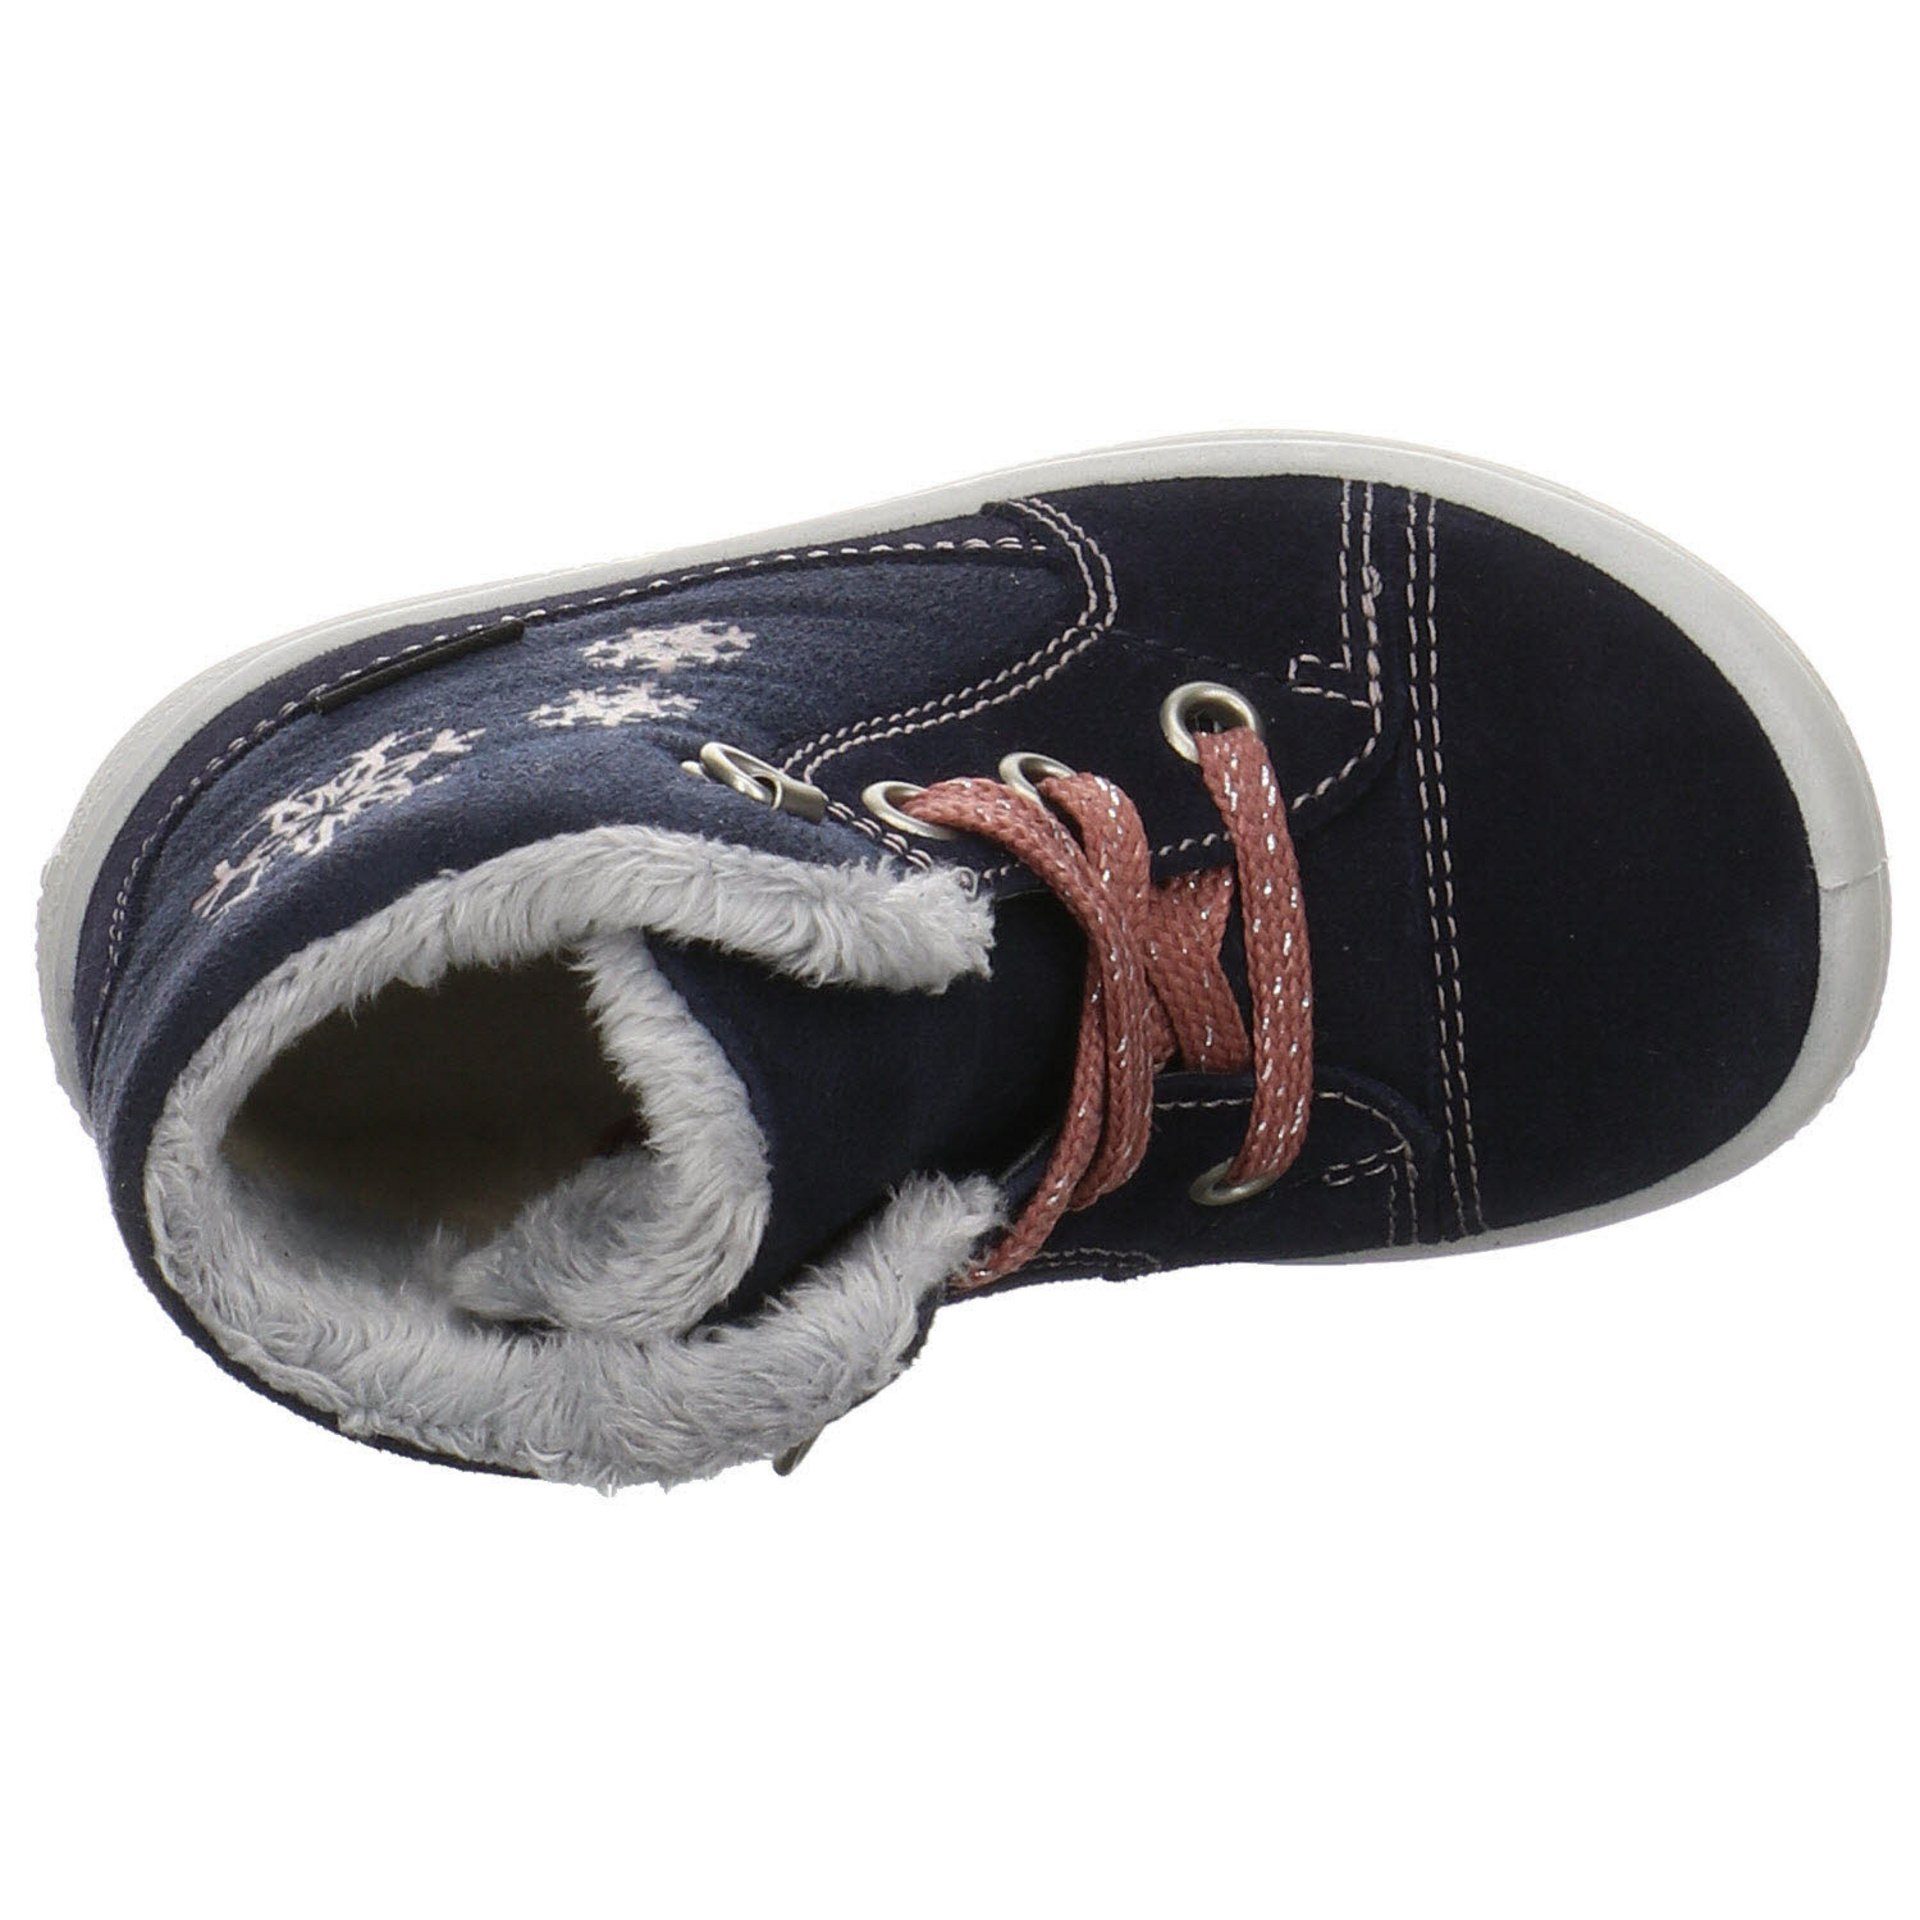 Lauflernschuh Leder-/Textilkombination Lauflernschuhe Groovy Superfit Boots Baby Krabbelschuhe